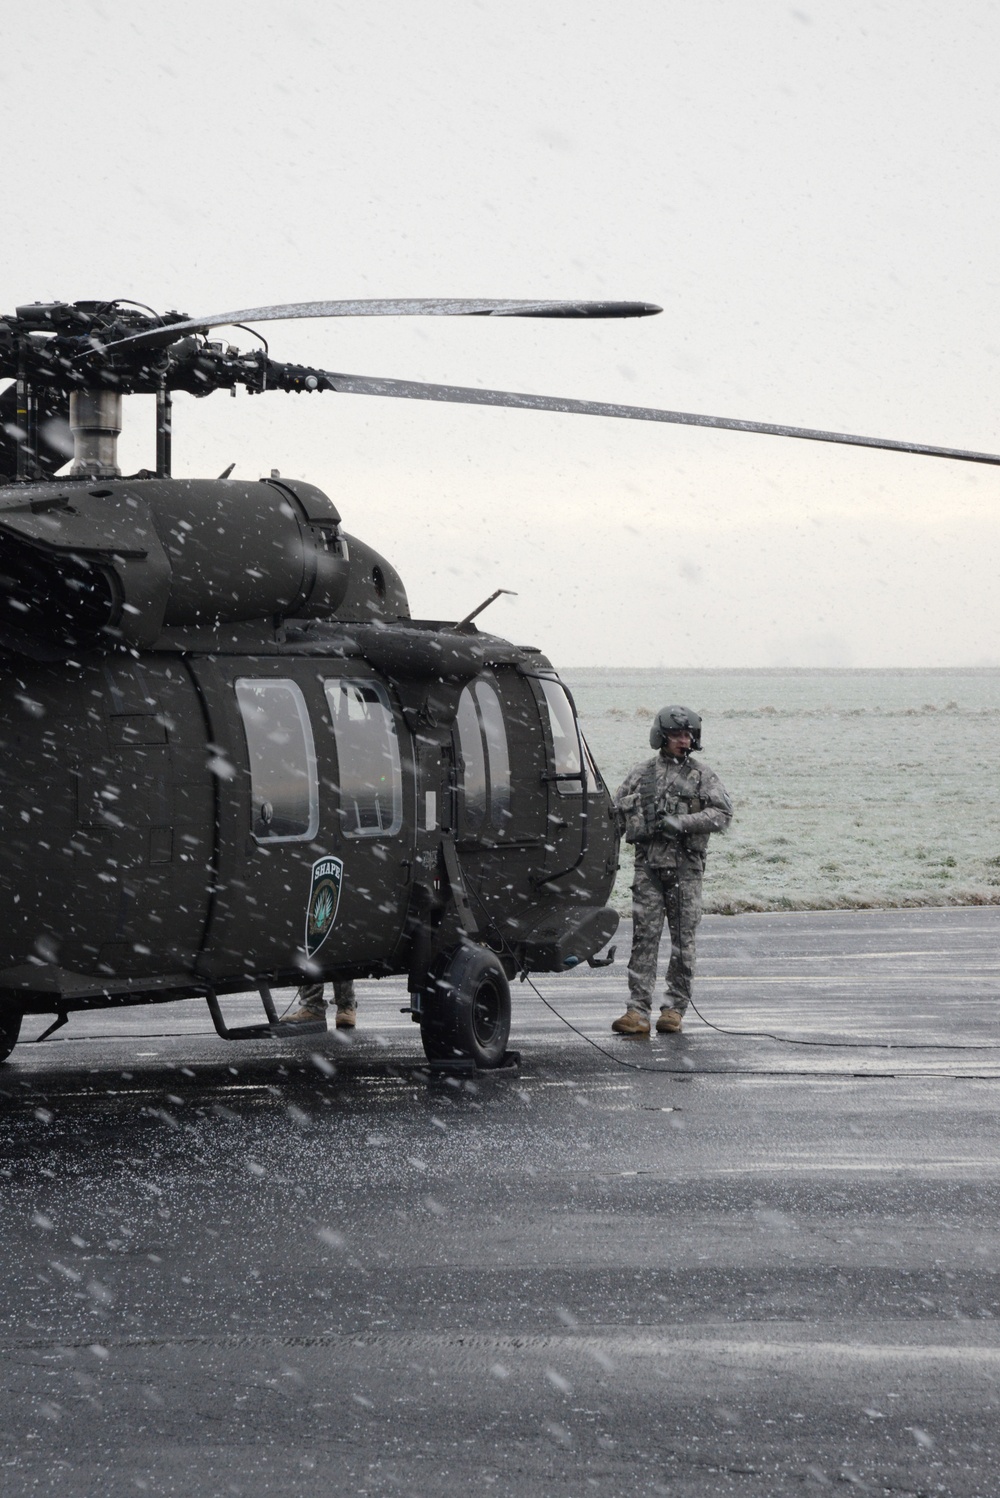 Pre-flight checks of a UH-60 Black Hawk